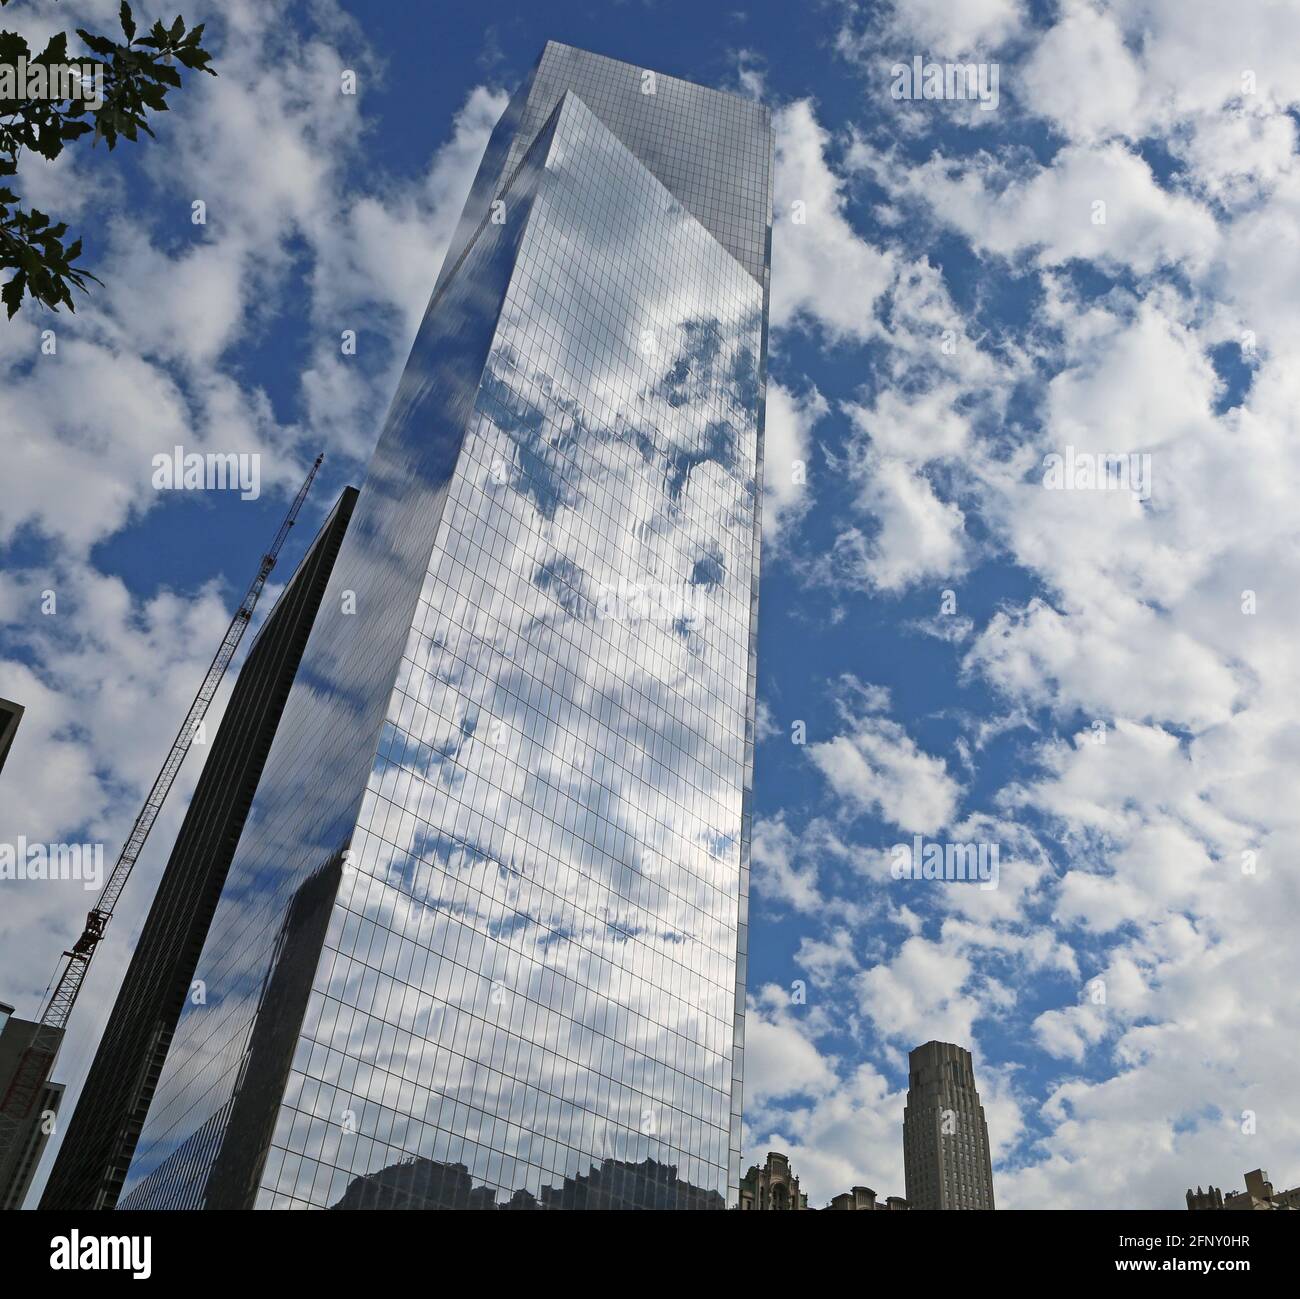 Four World Trade center - New York Stock Photo